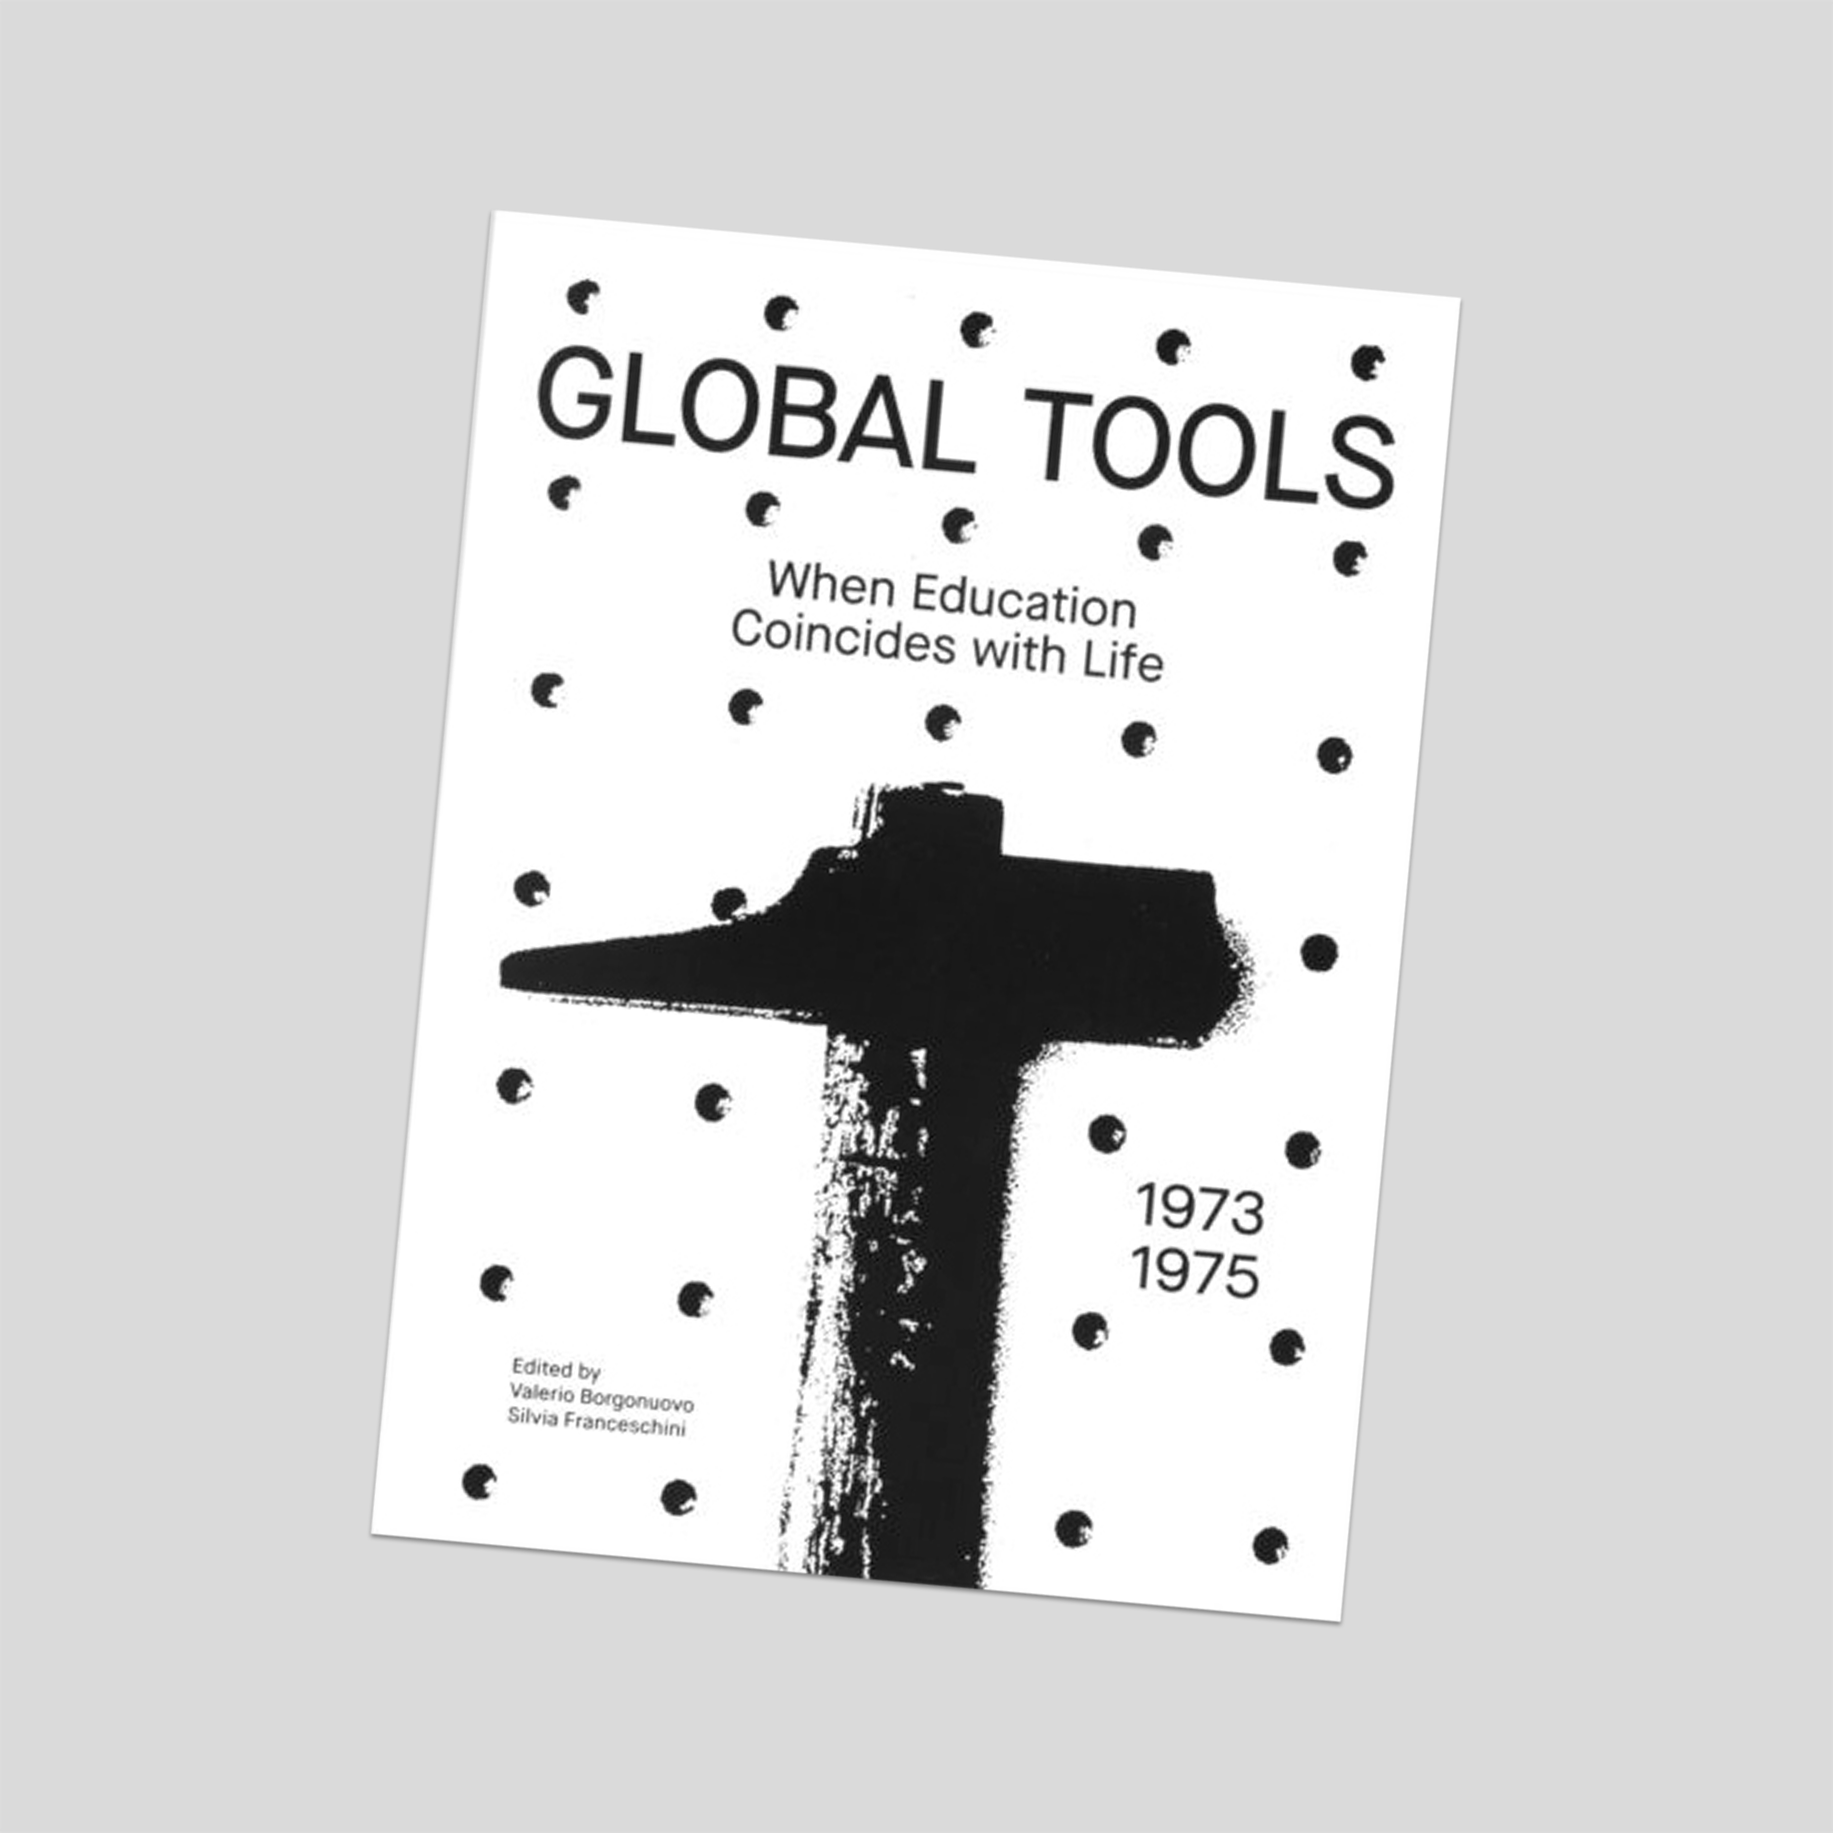 Global tools